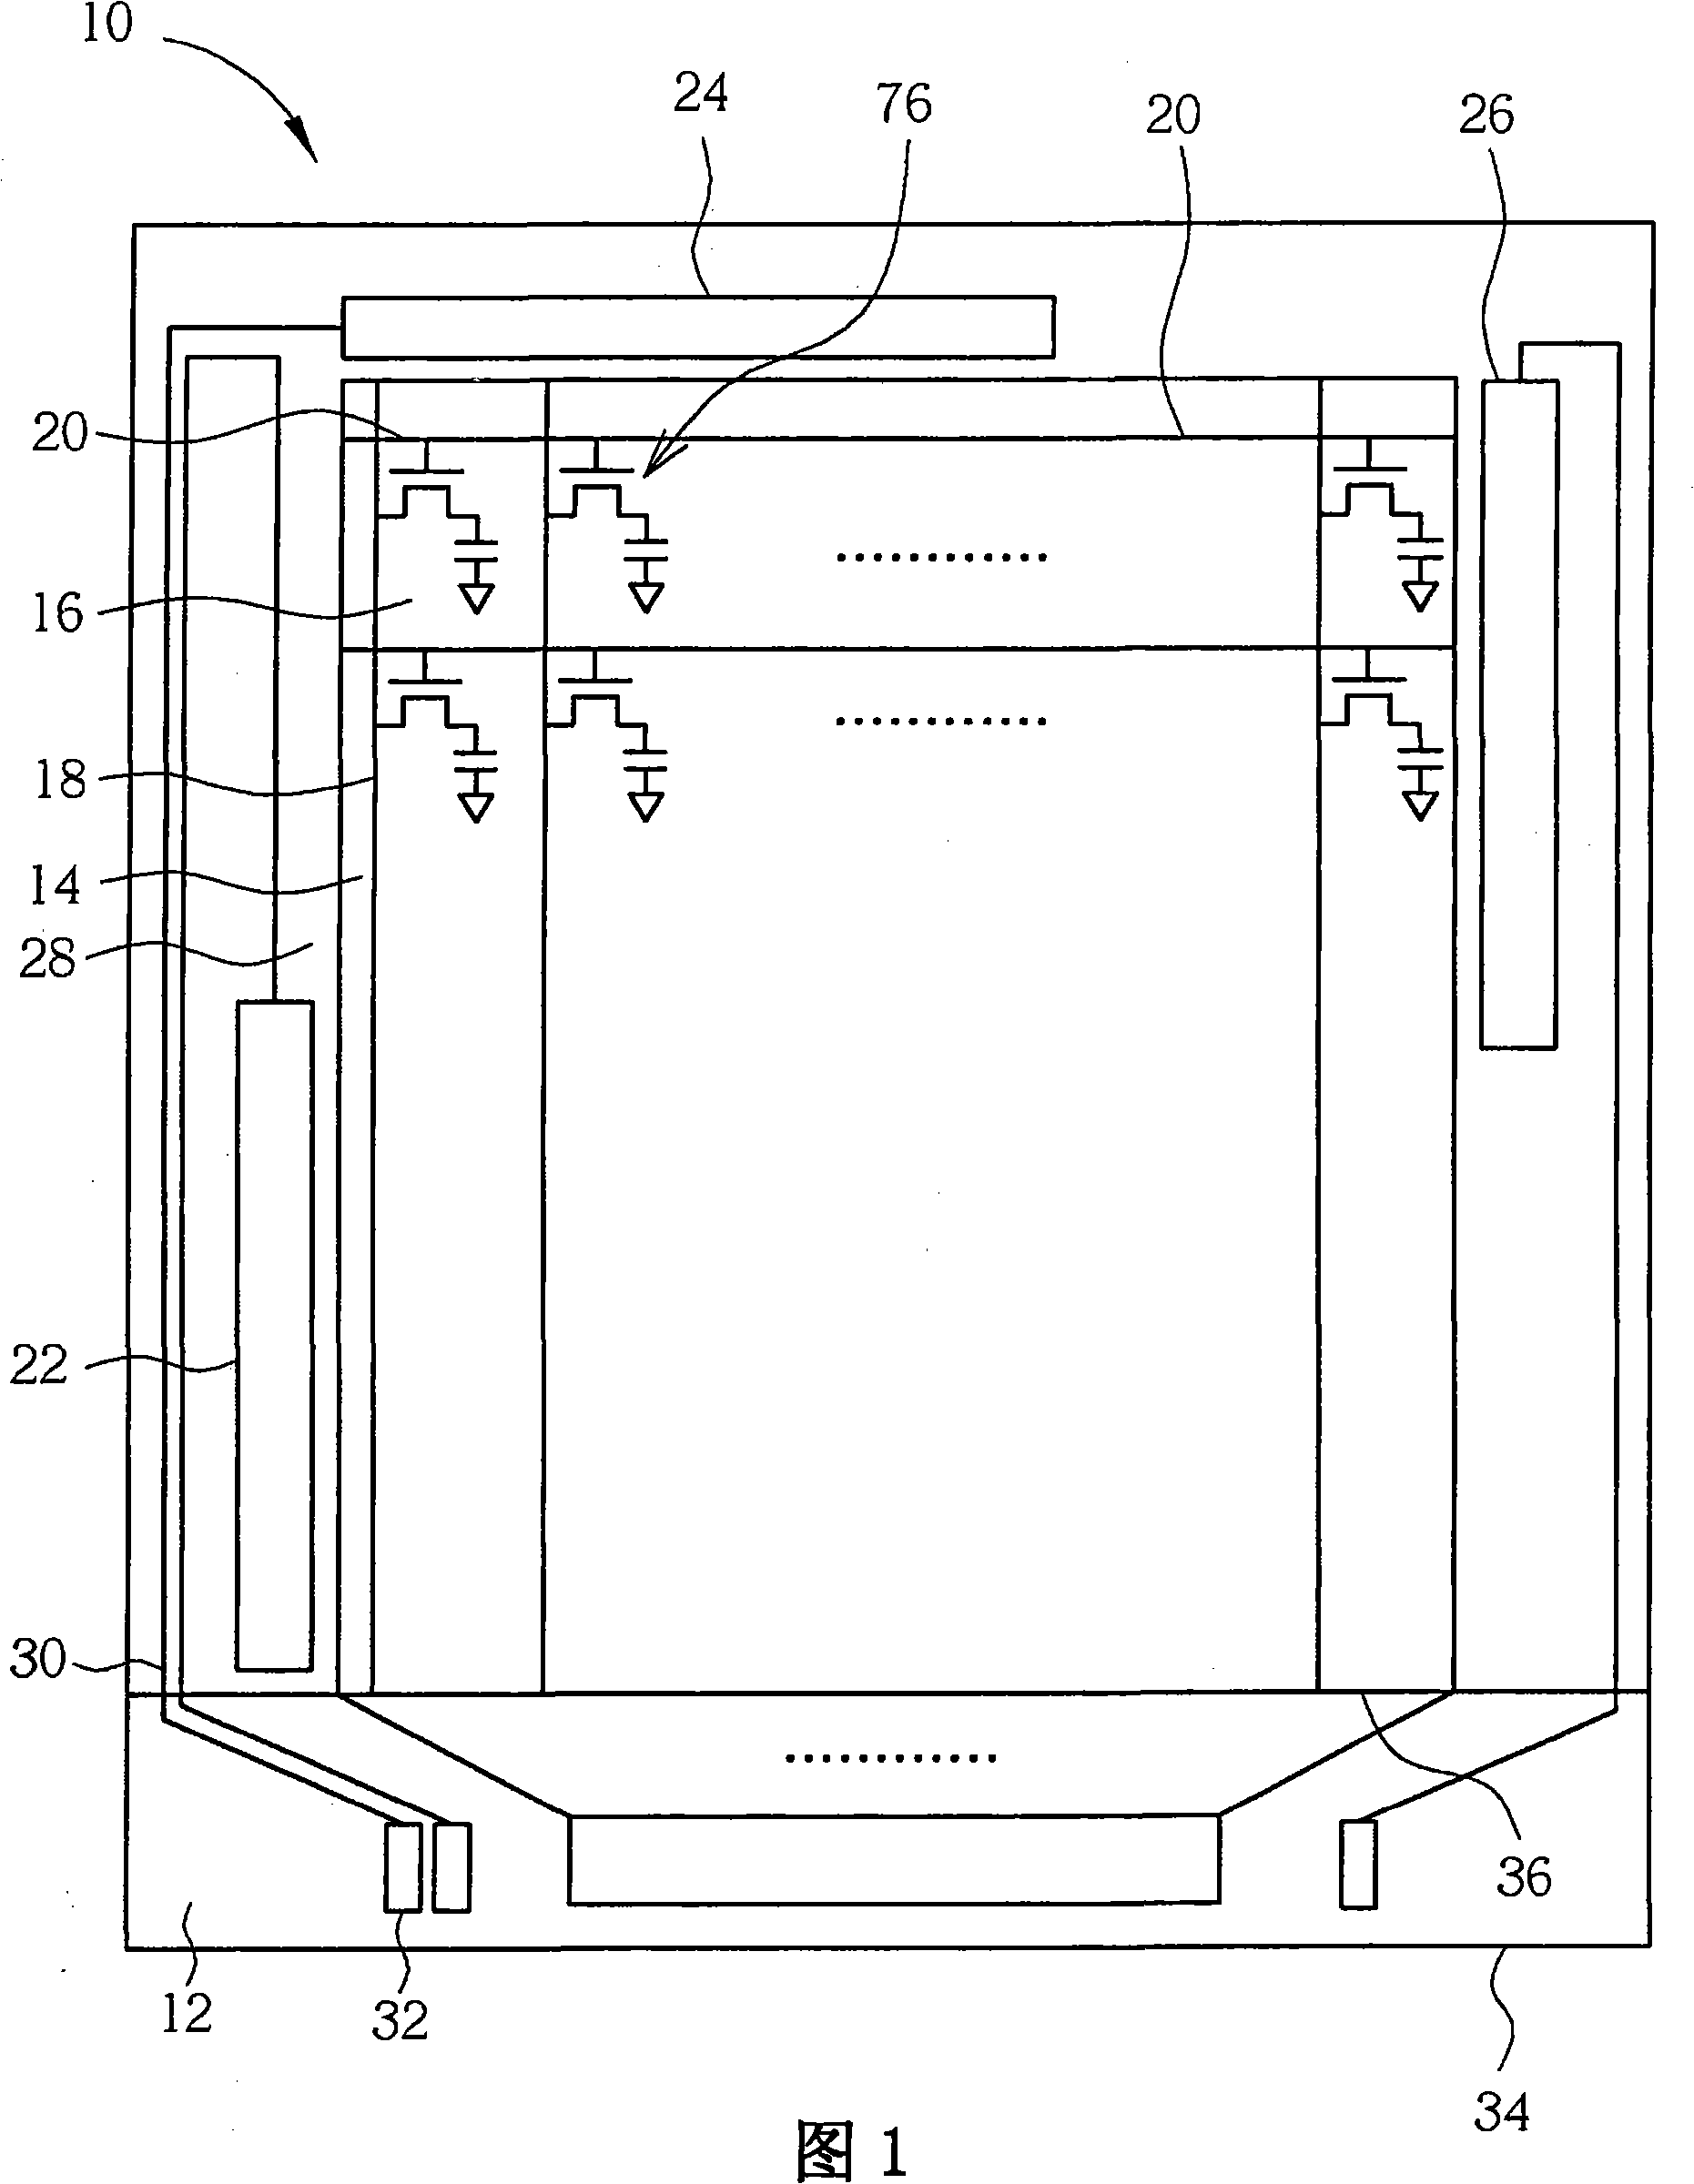 Method for preparing light inductor